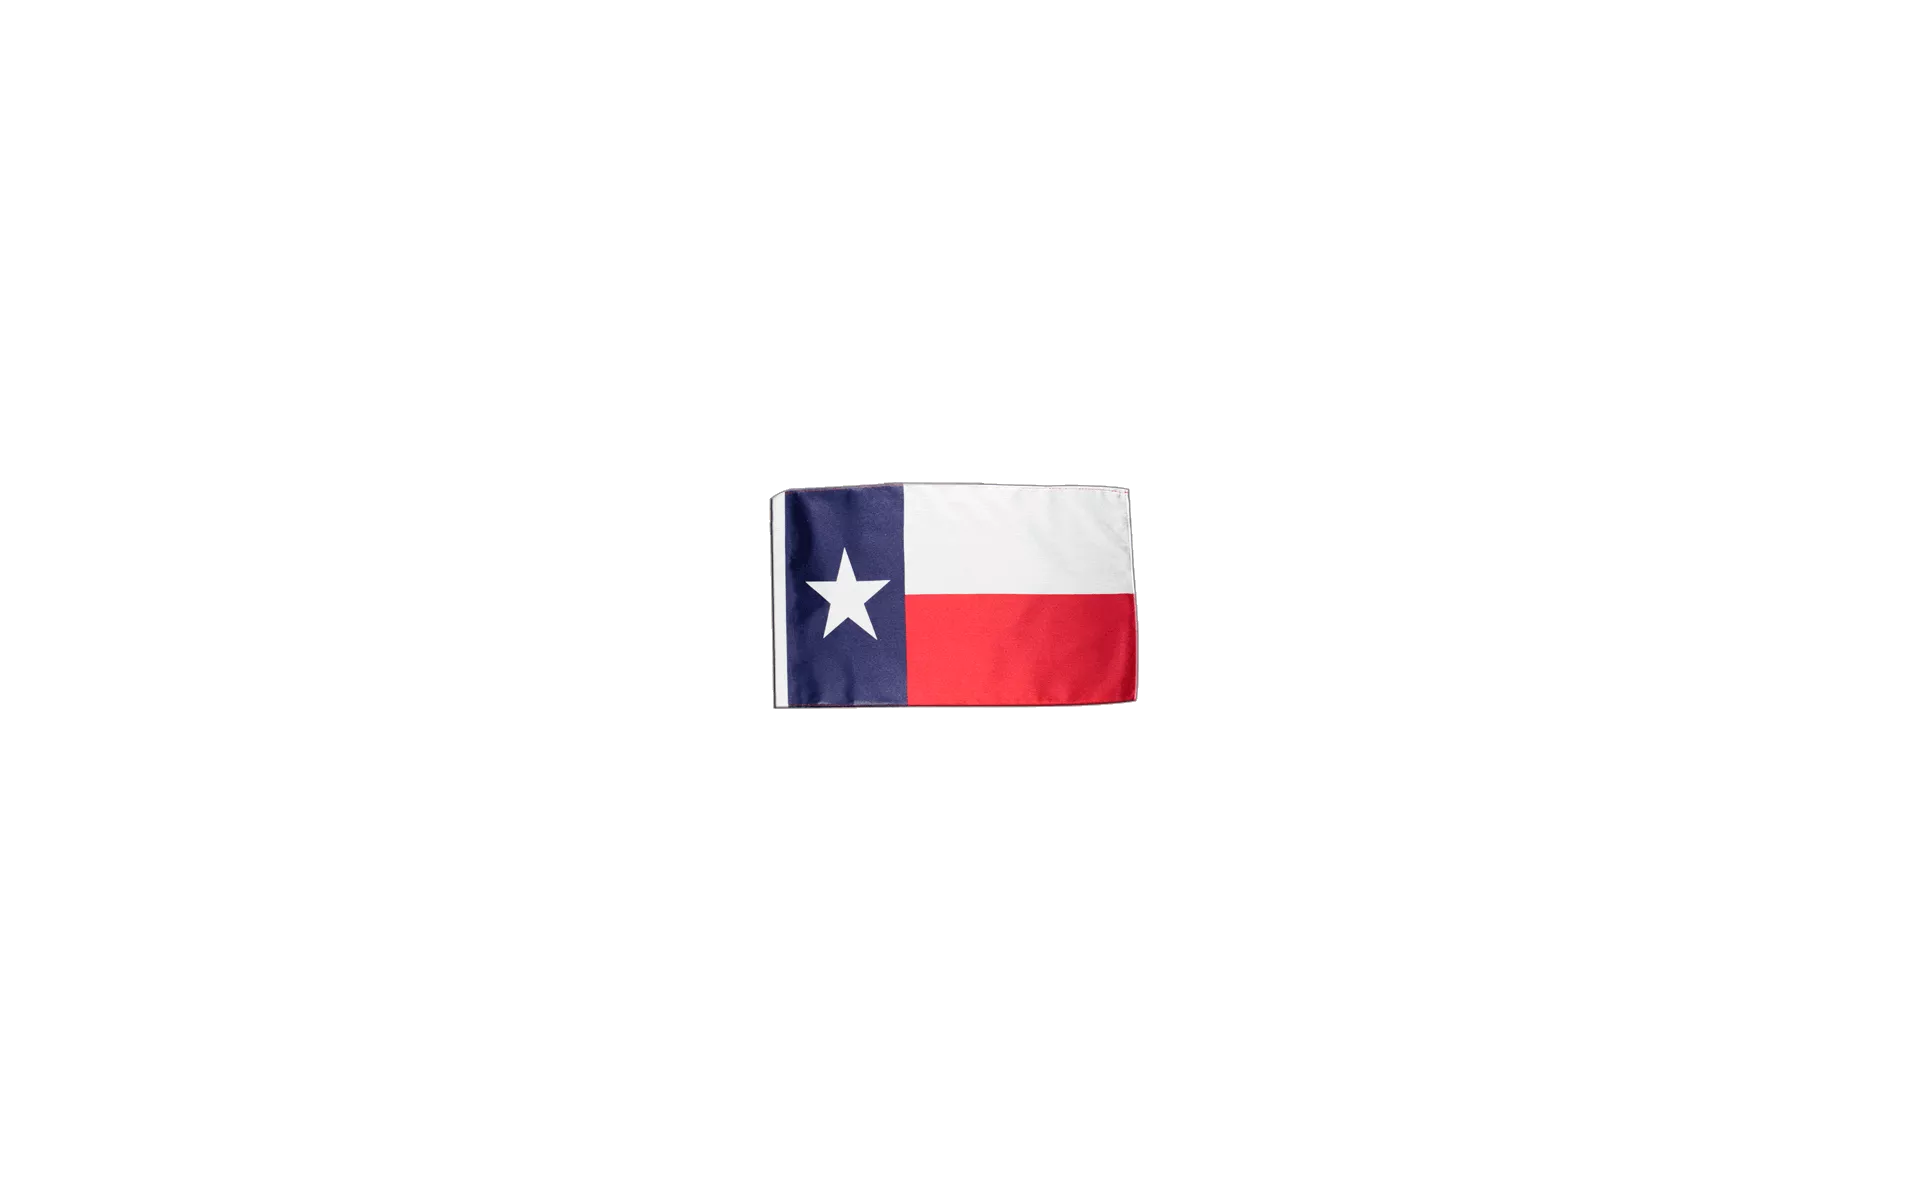 Texas 30 x 45 cm Flagge Fahne USA 